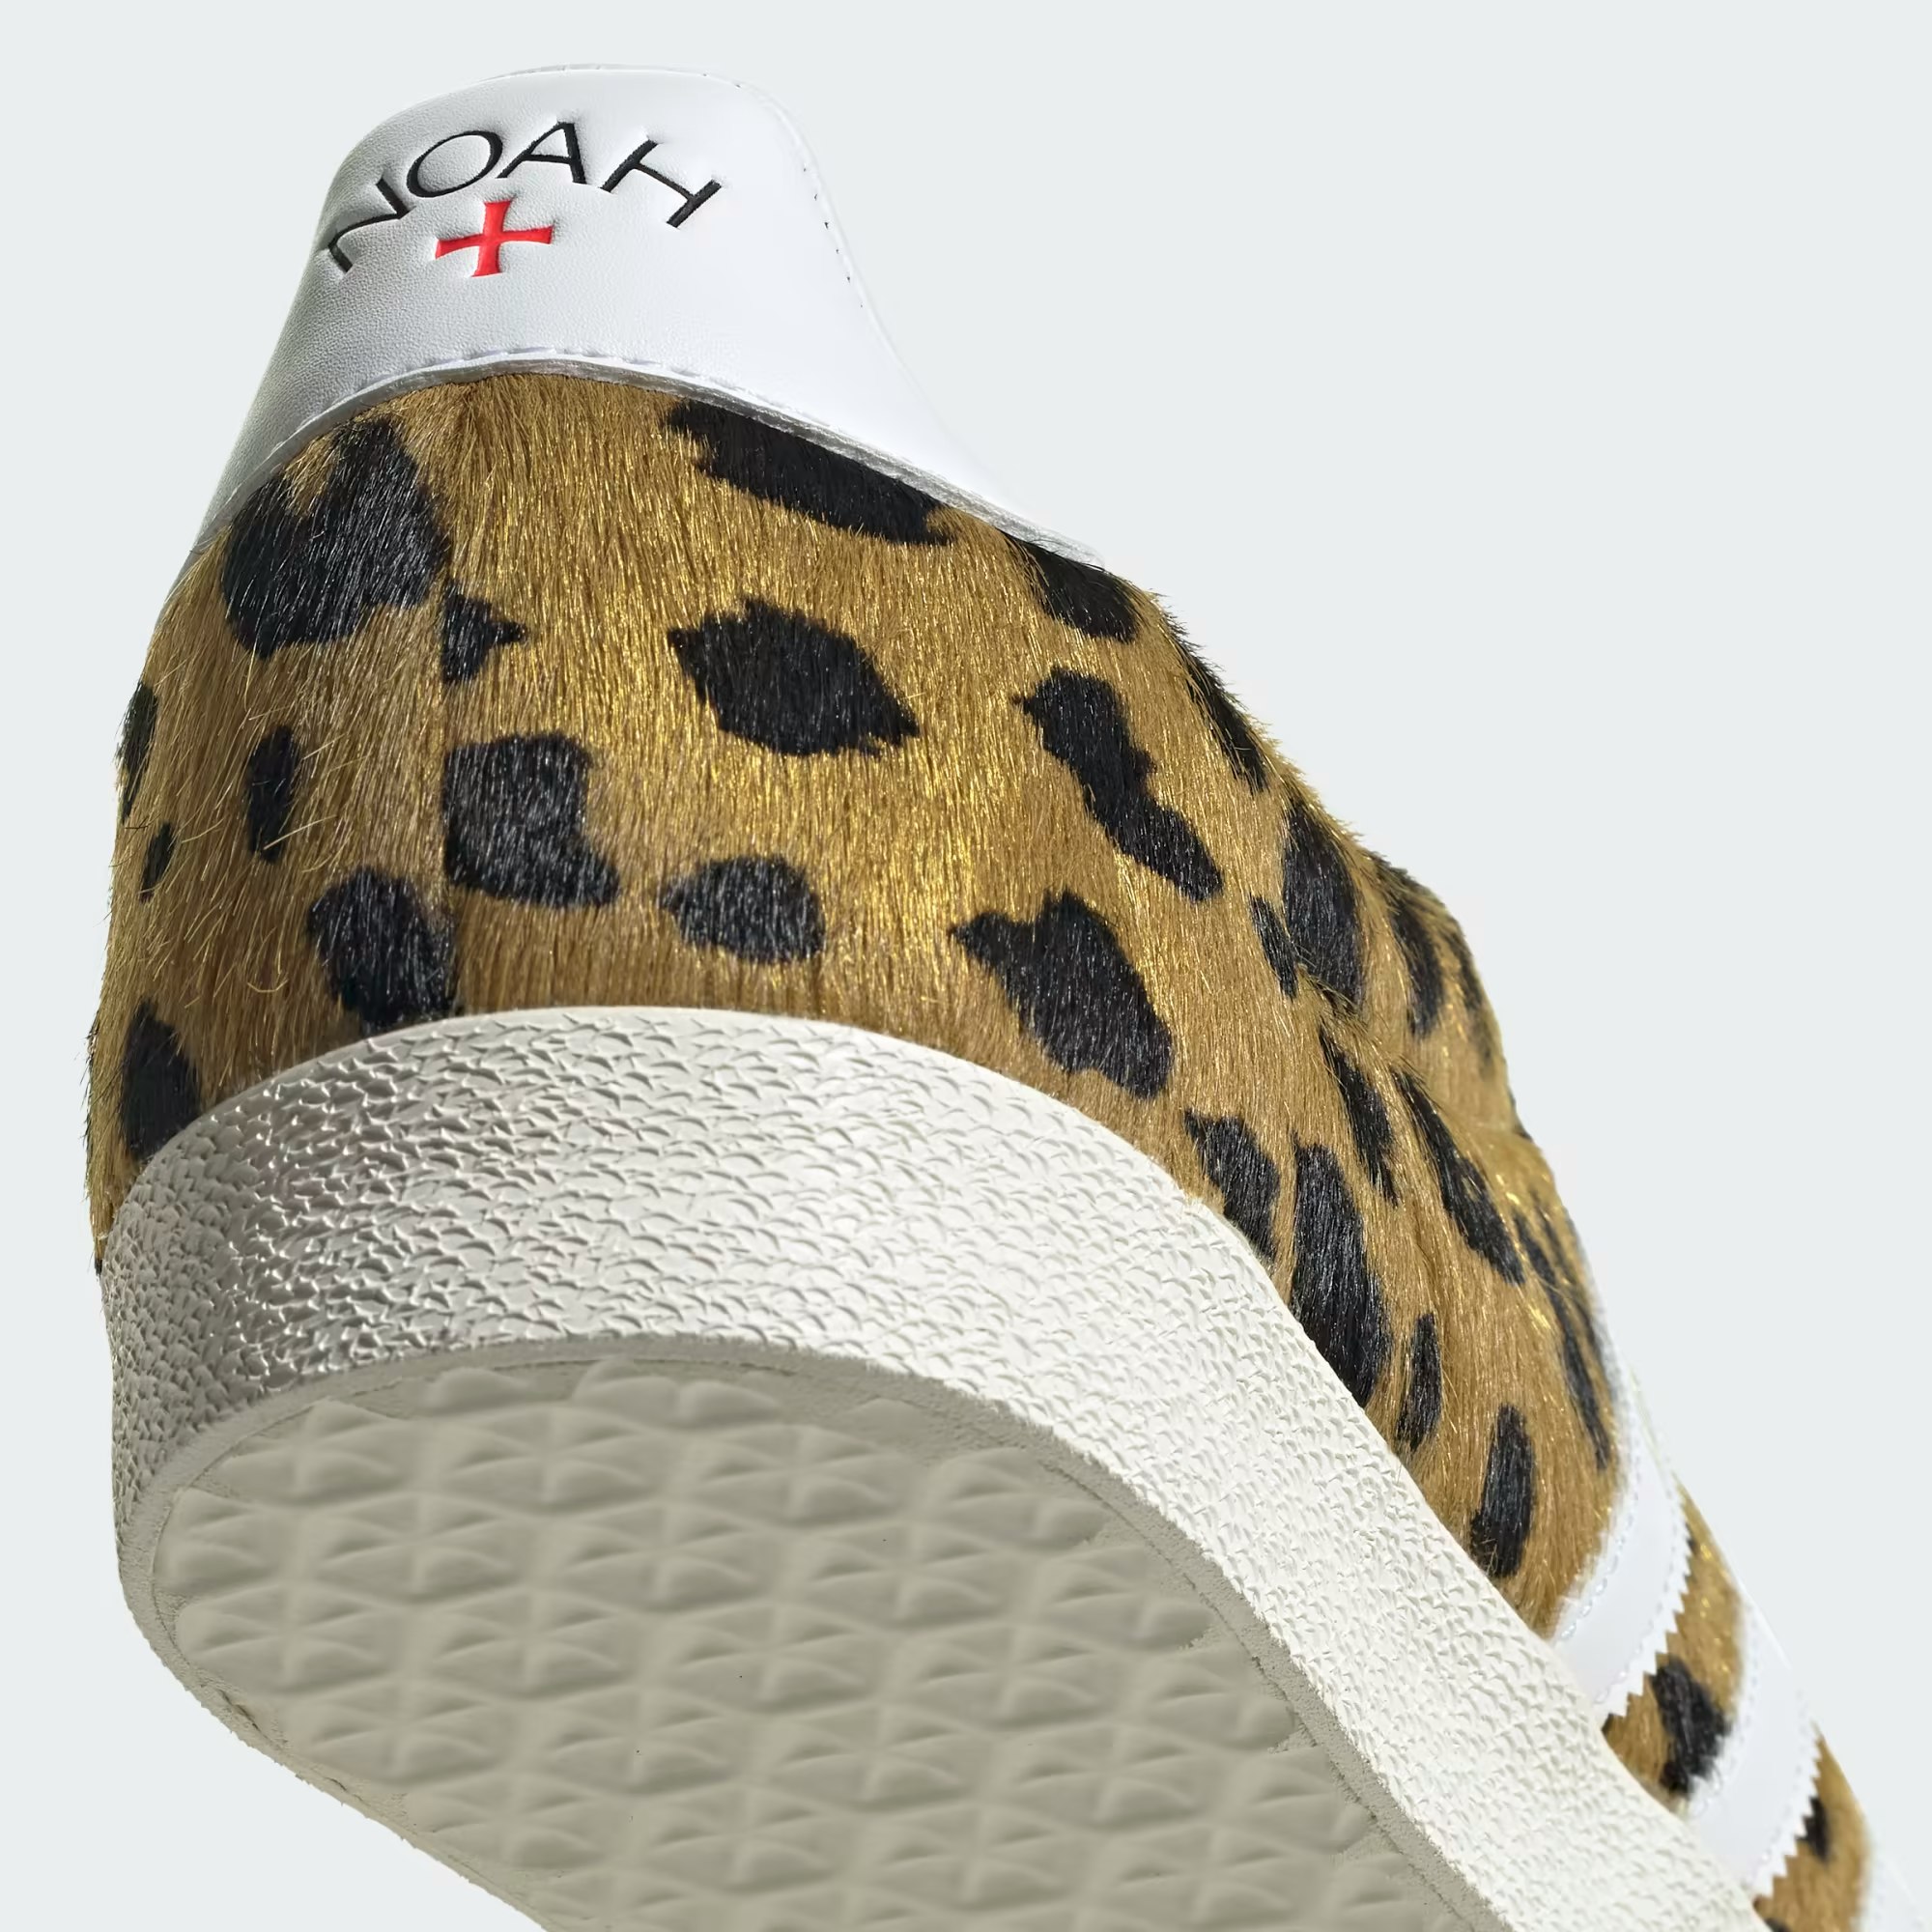 NOAH x adidas Gazelle "Cheetah" 